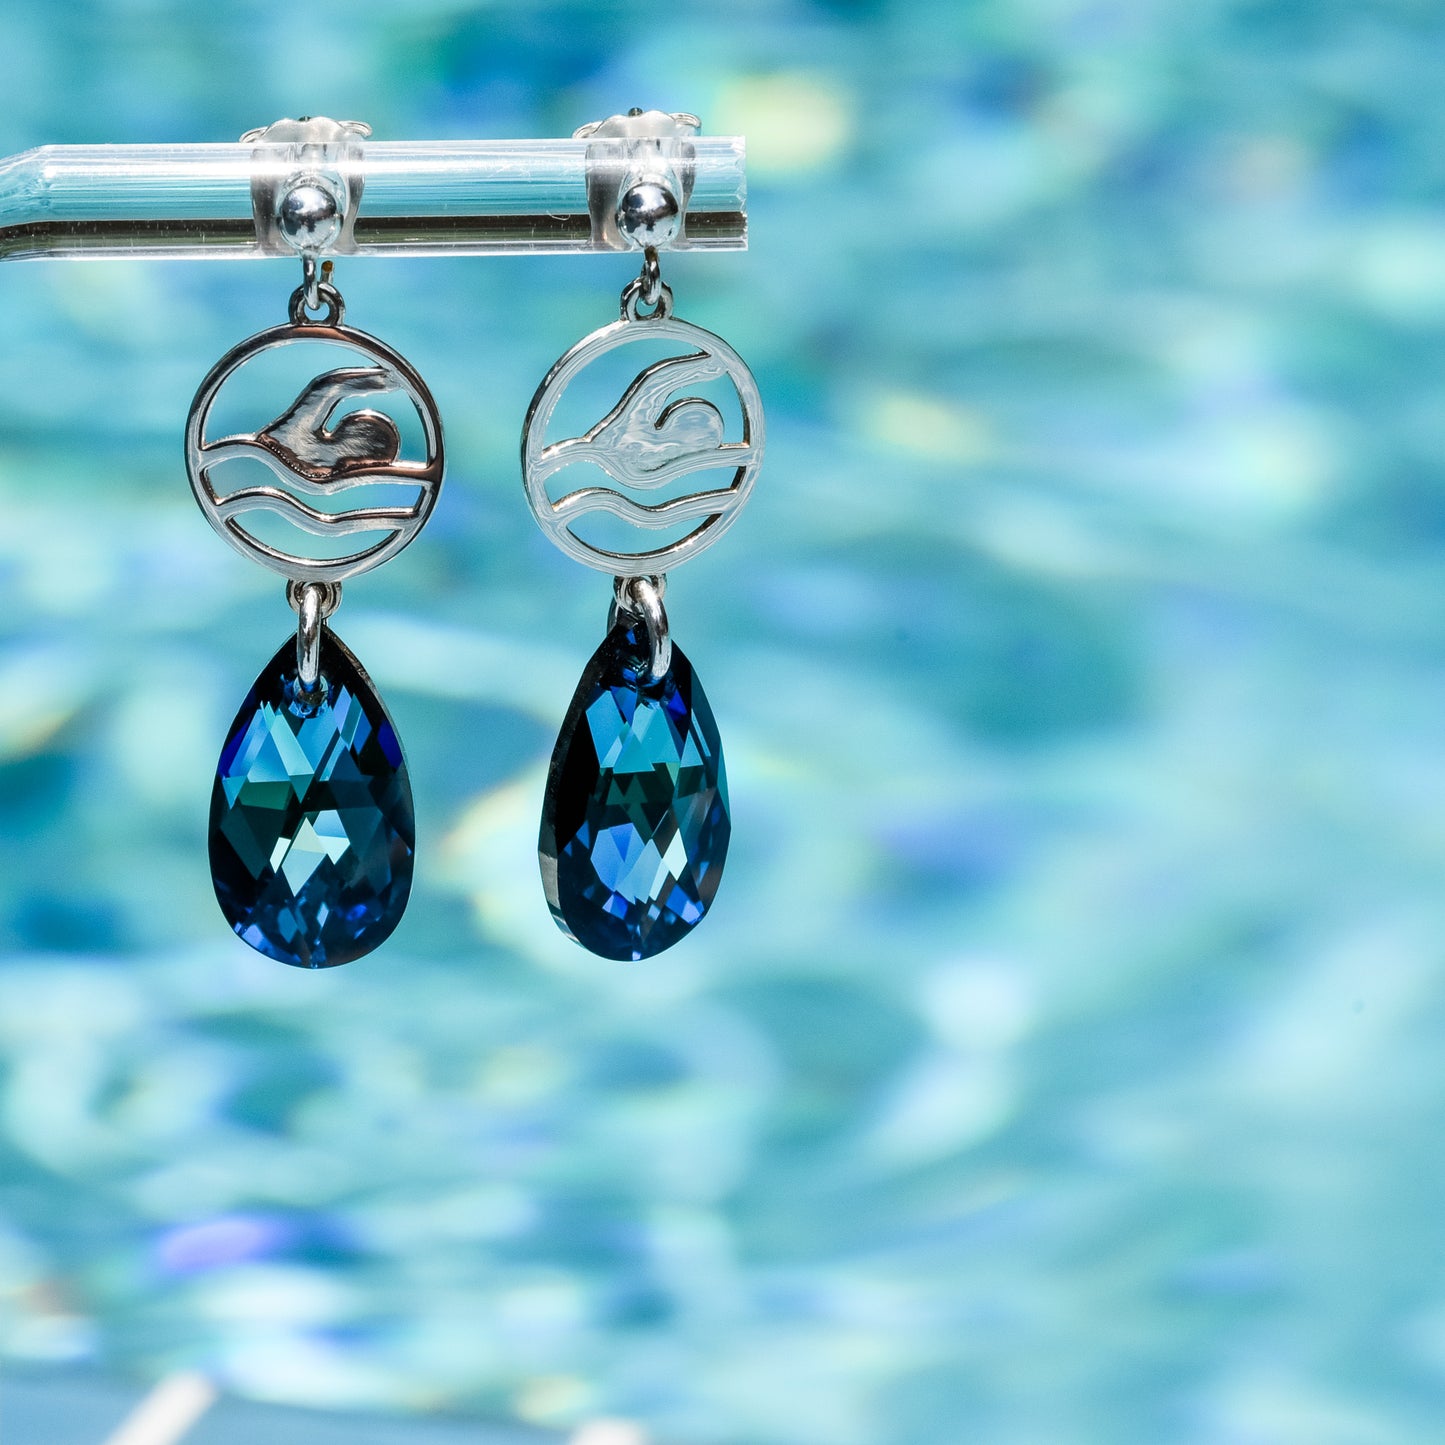 Swim Small Dangle Earrings (Post Style)